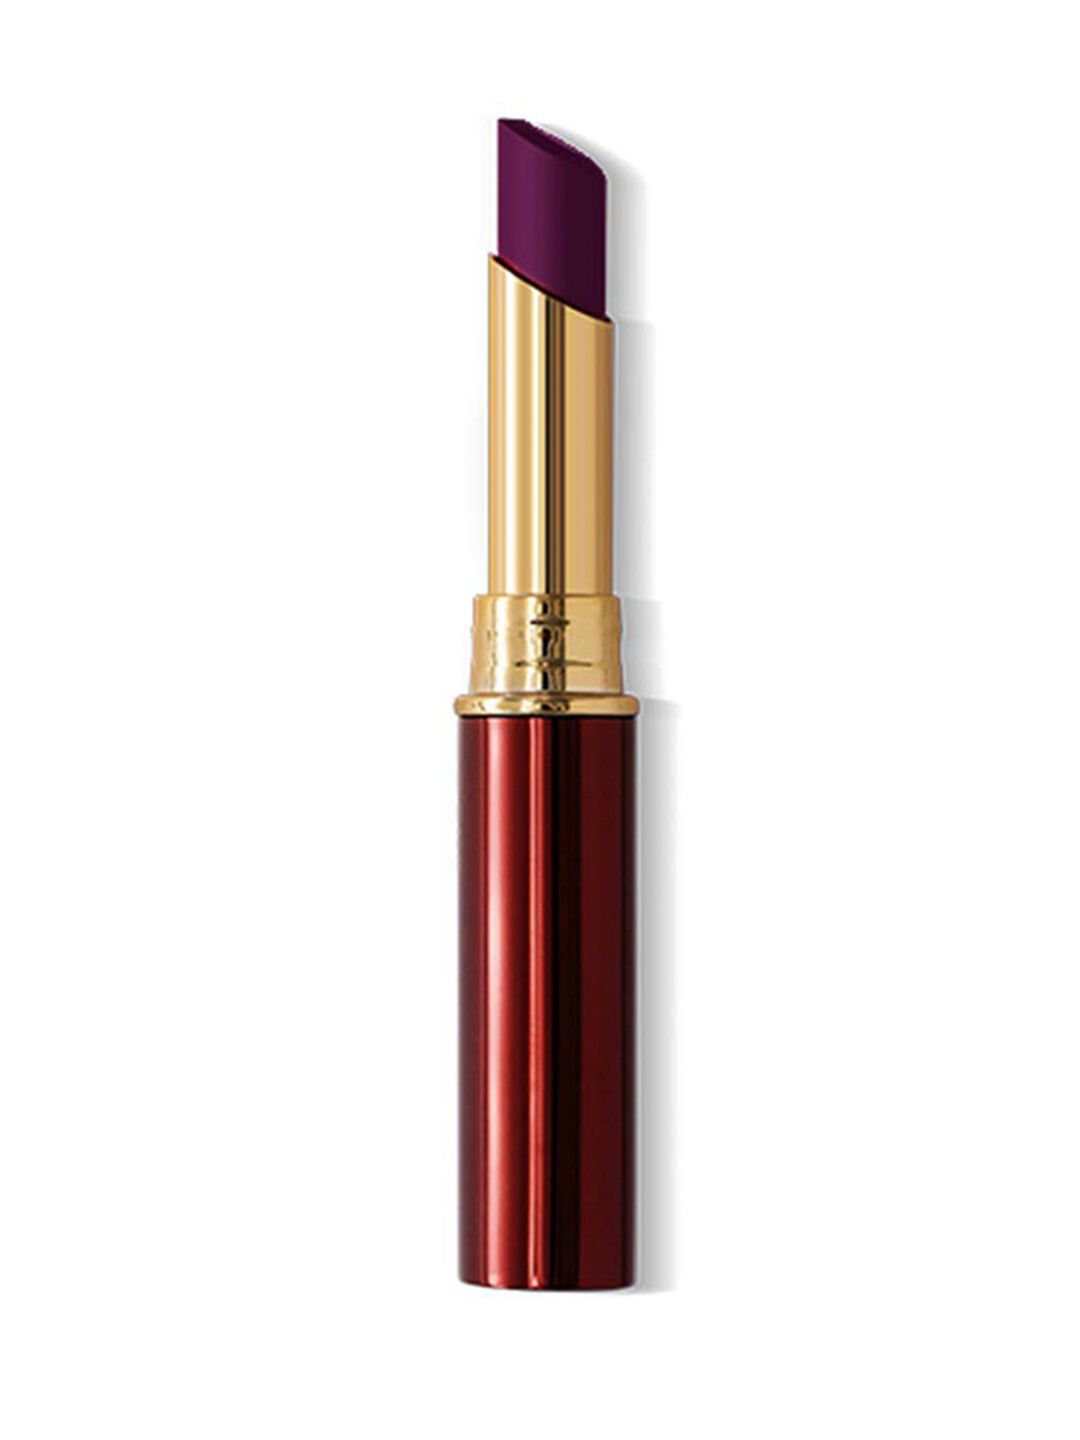 Charmacy Milano Longstay Matte Lipstick Waterproof - Big Bang Berry 14 Price in India